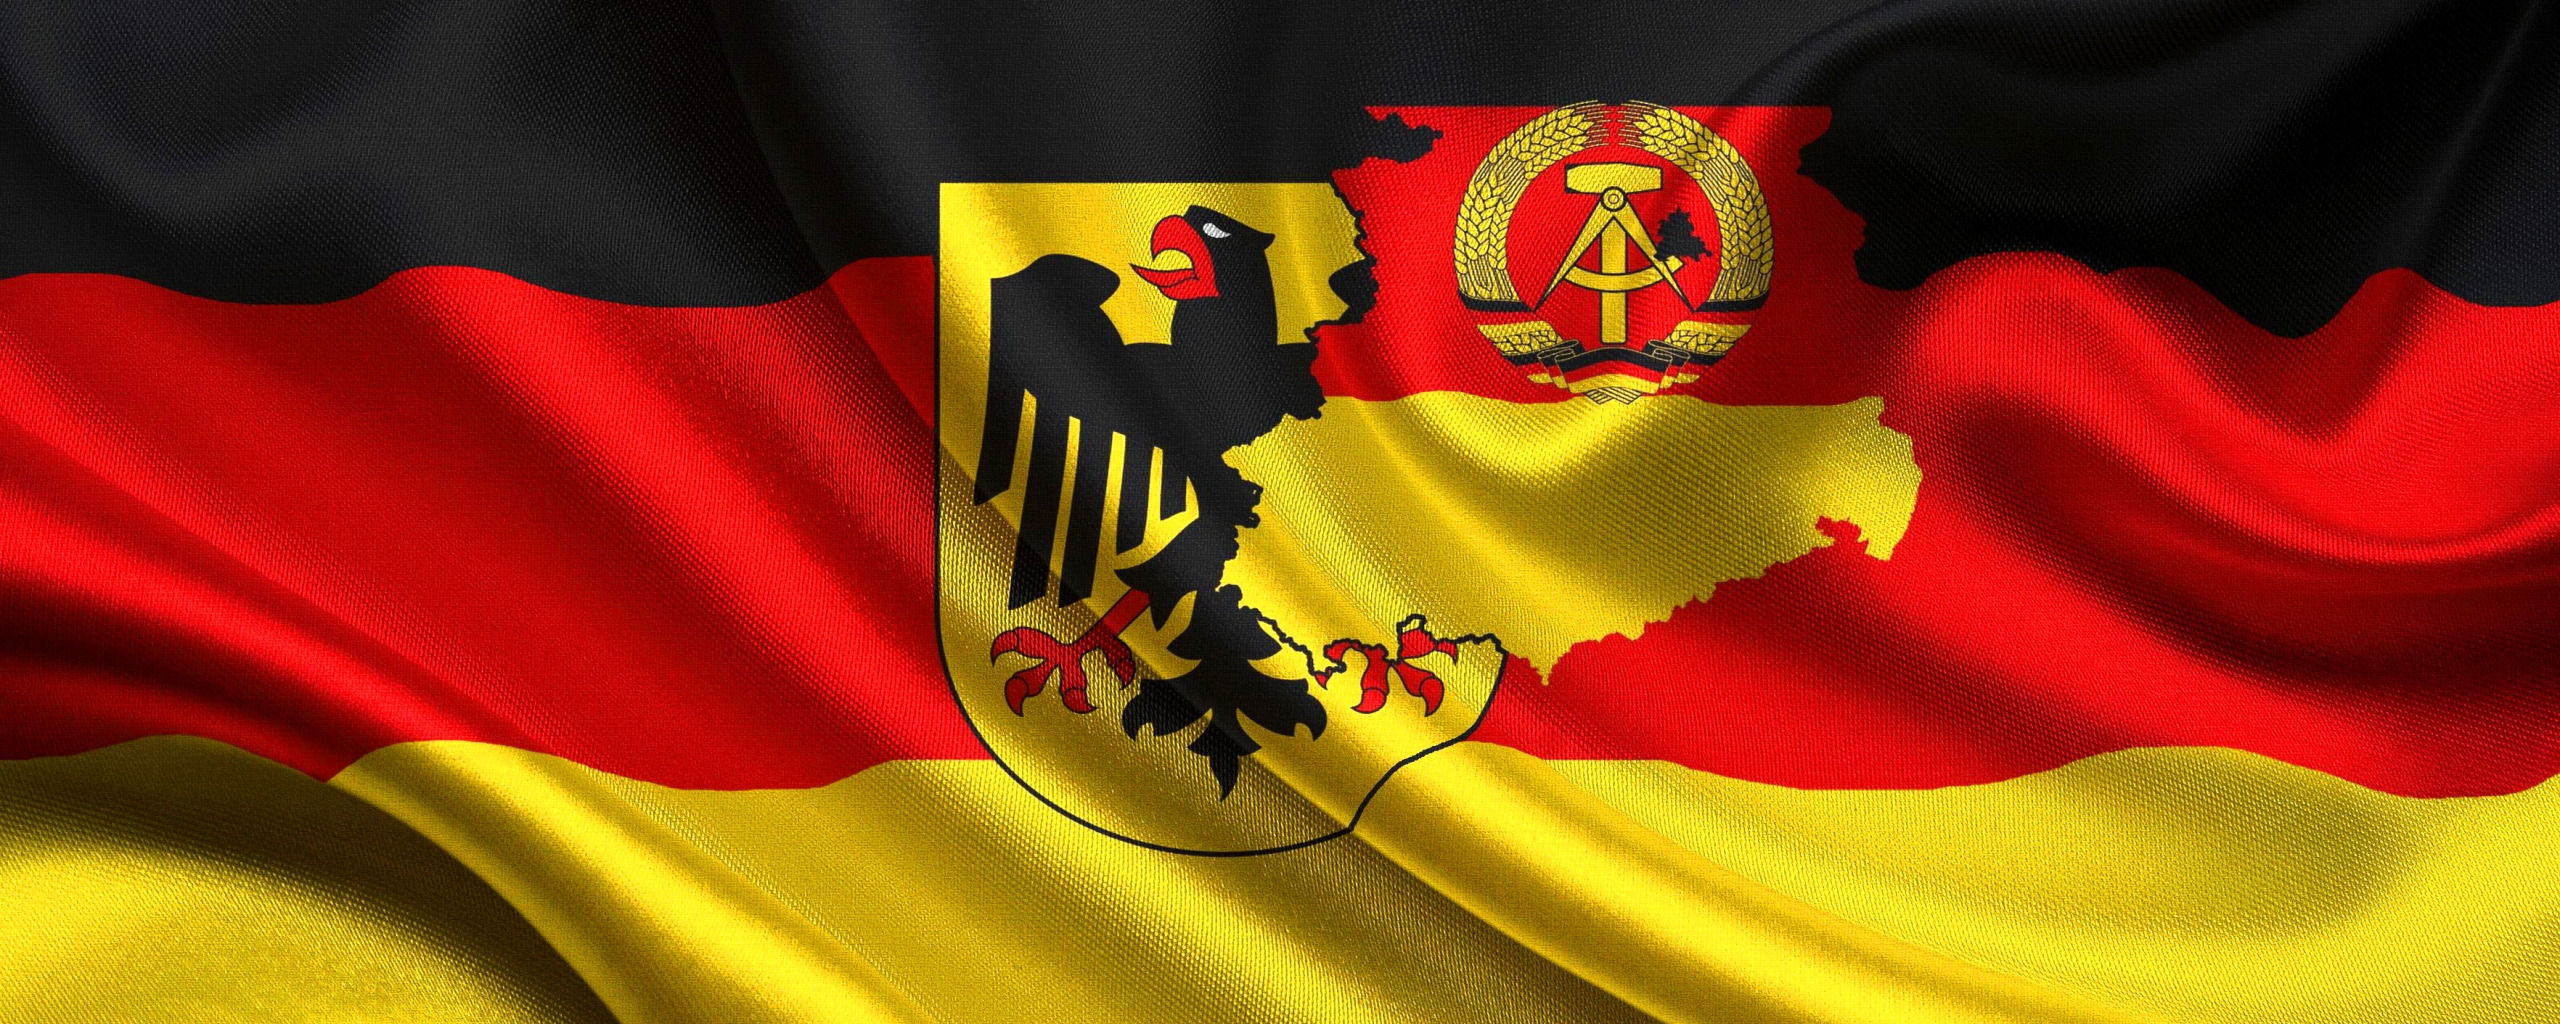 Германию сливают. Флаг ГДР И флаг ФРГ. Флаг Германии ФРГ И ГДР. ФРГ И ГДР флаги и гербы. Флаг Германии 1949.